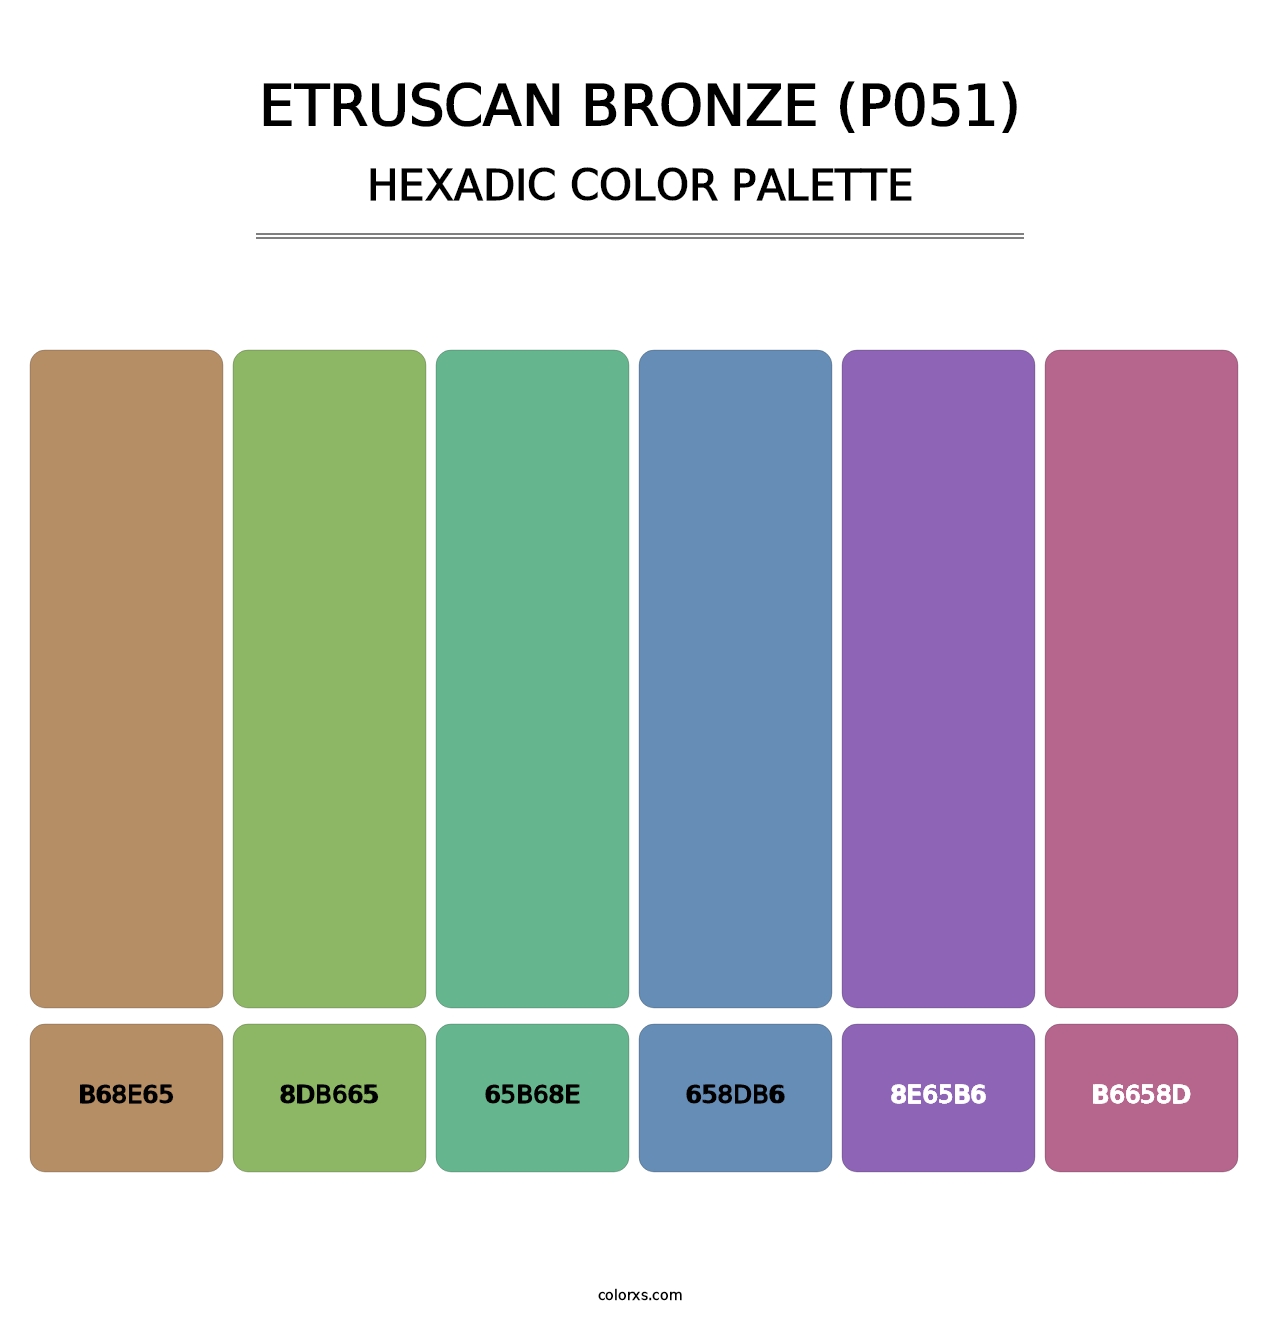 Etruscan Bronze (P051) - Hexadic Color Palette